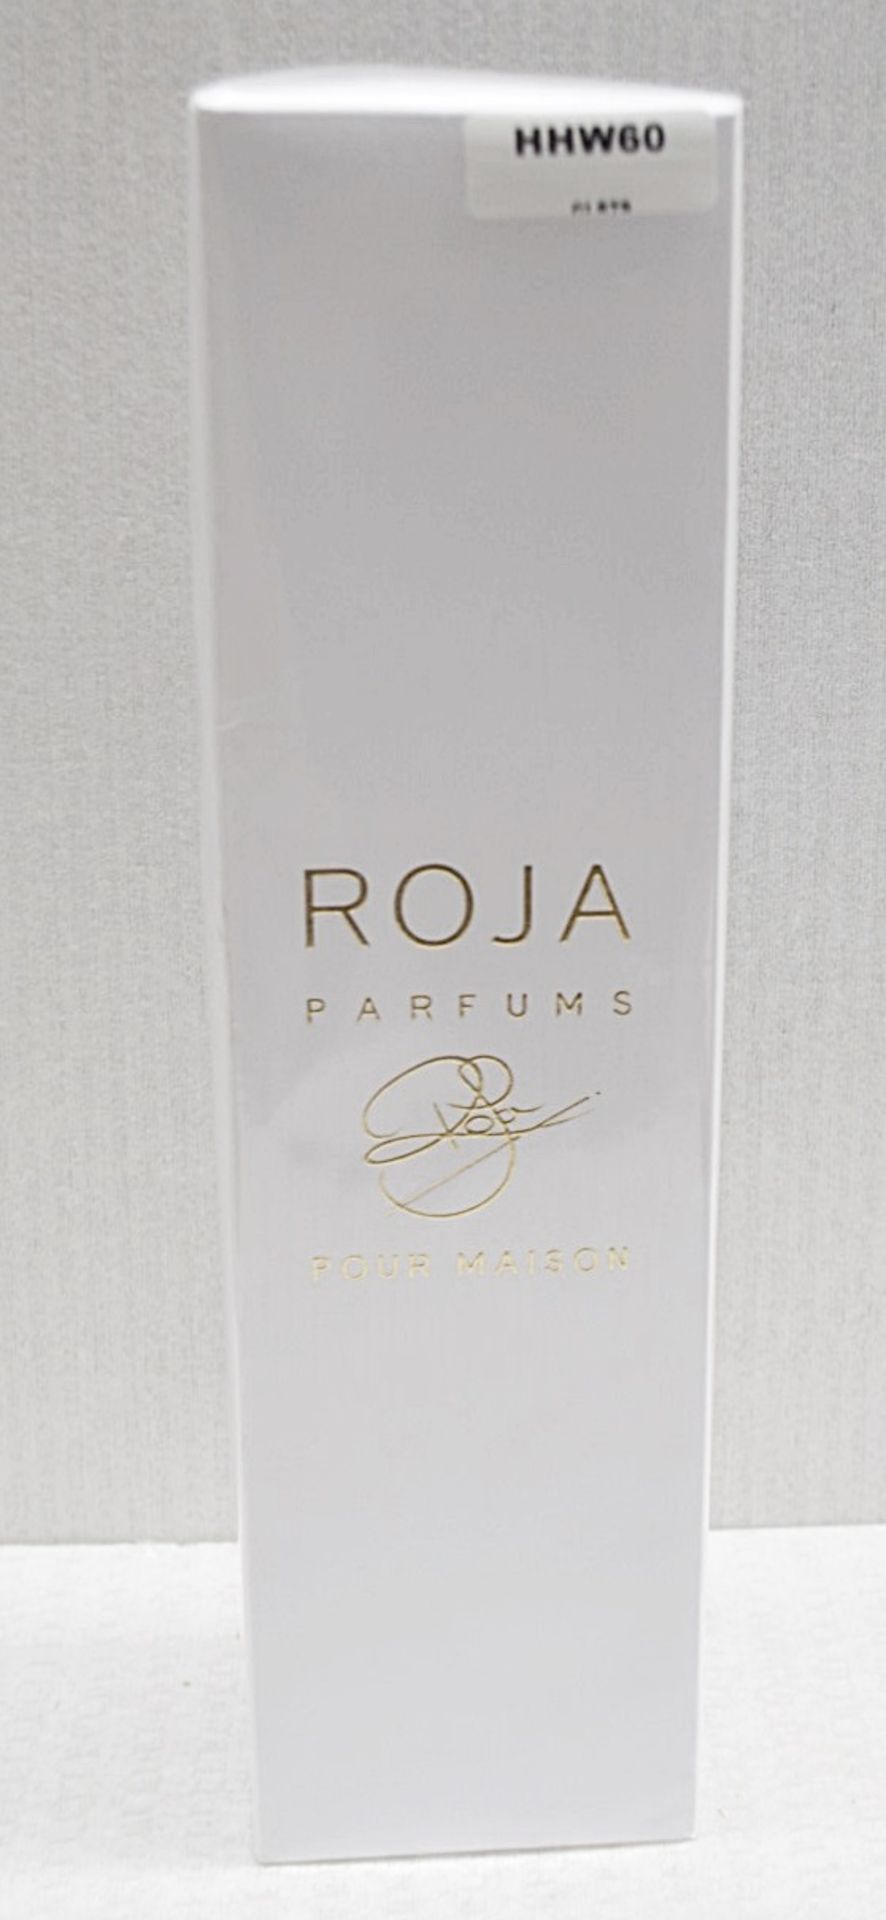 1 x Roja Reed Diffuser Refill - Ref: HHW60/JUL21/PAL-B - CL011 - Location: Altrincham WA14More